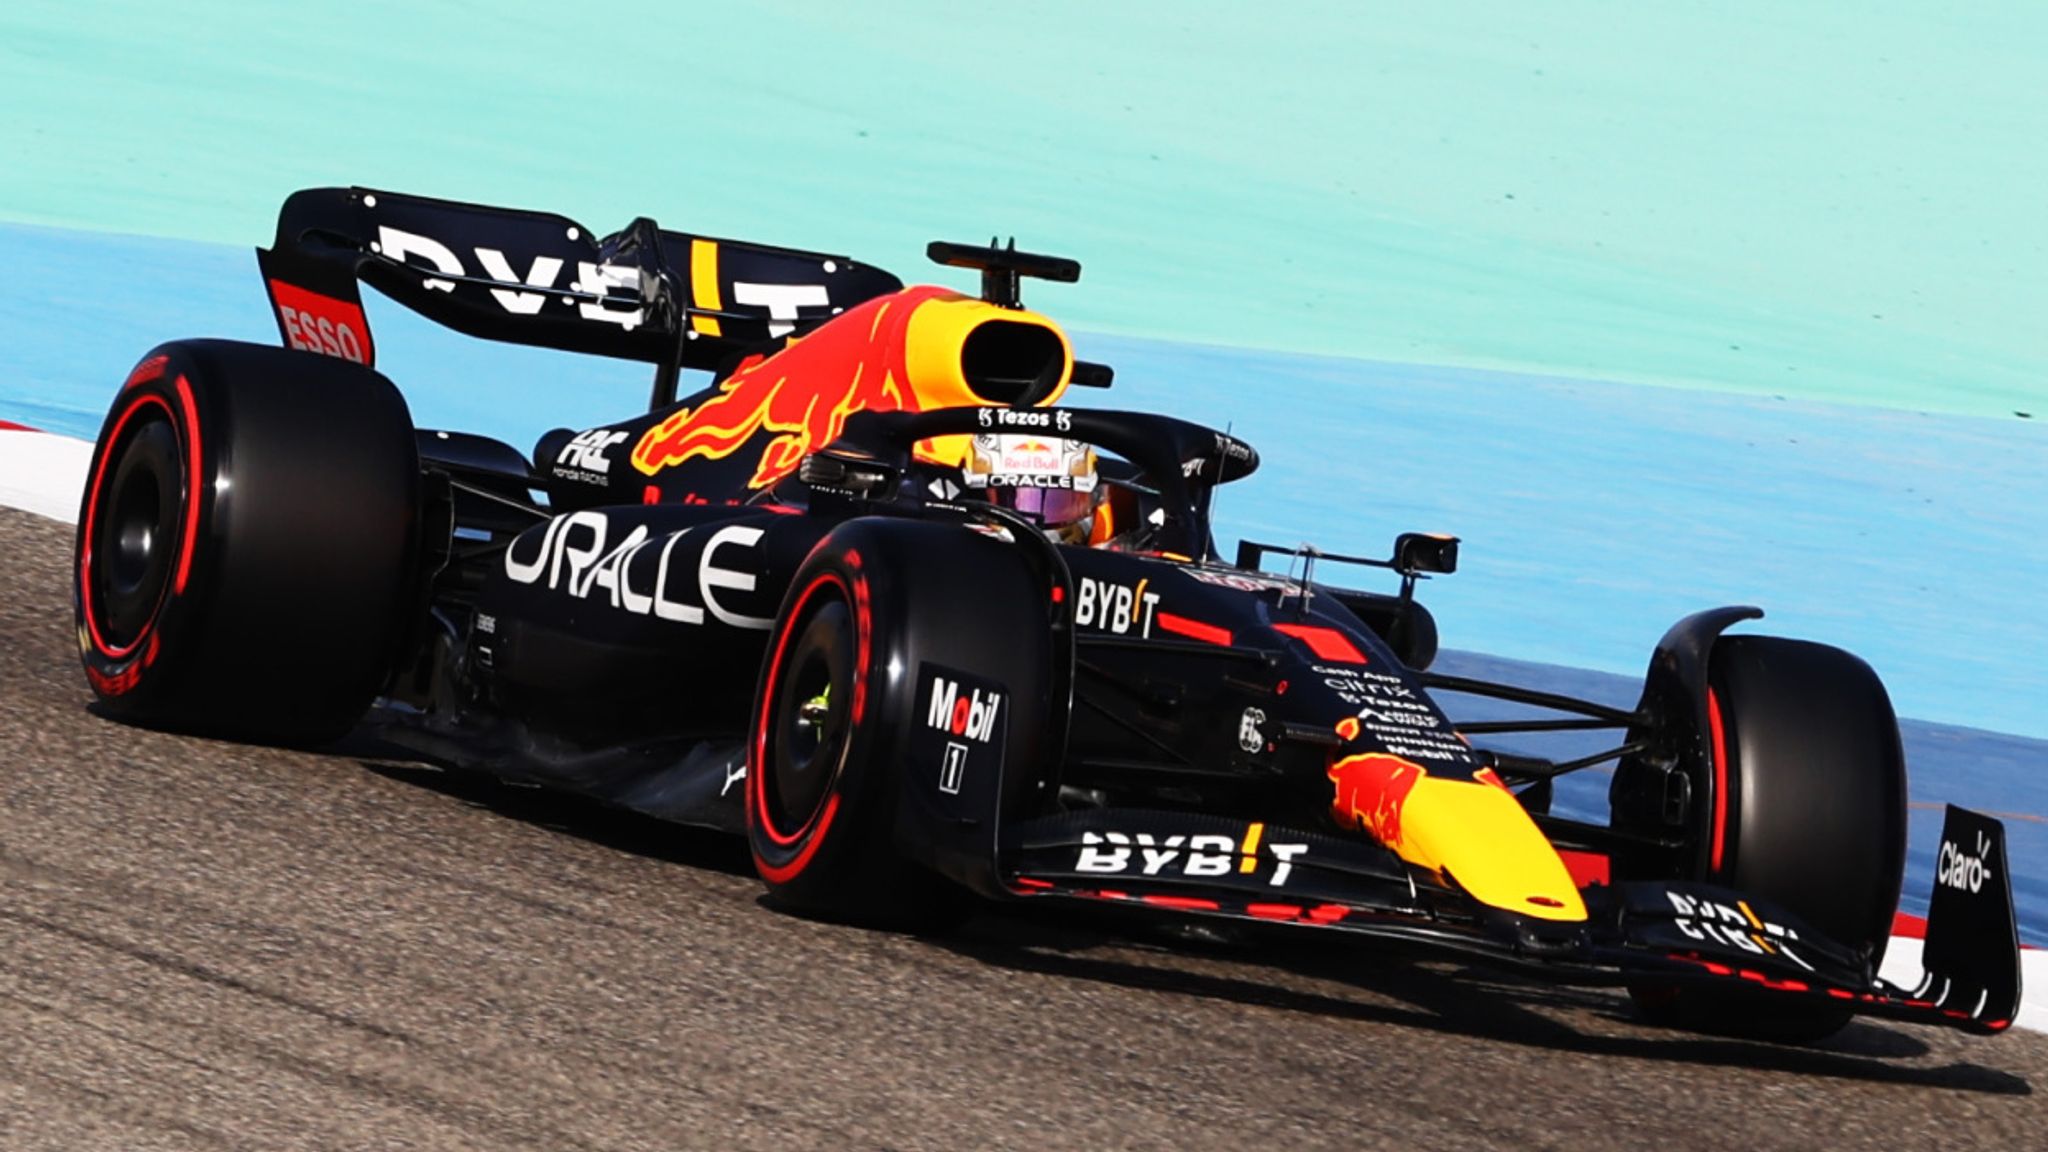 Bahrain GP: Max Verstappen fastest for Red Bull in Practice 3 despite Mercedes improvement